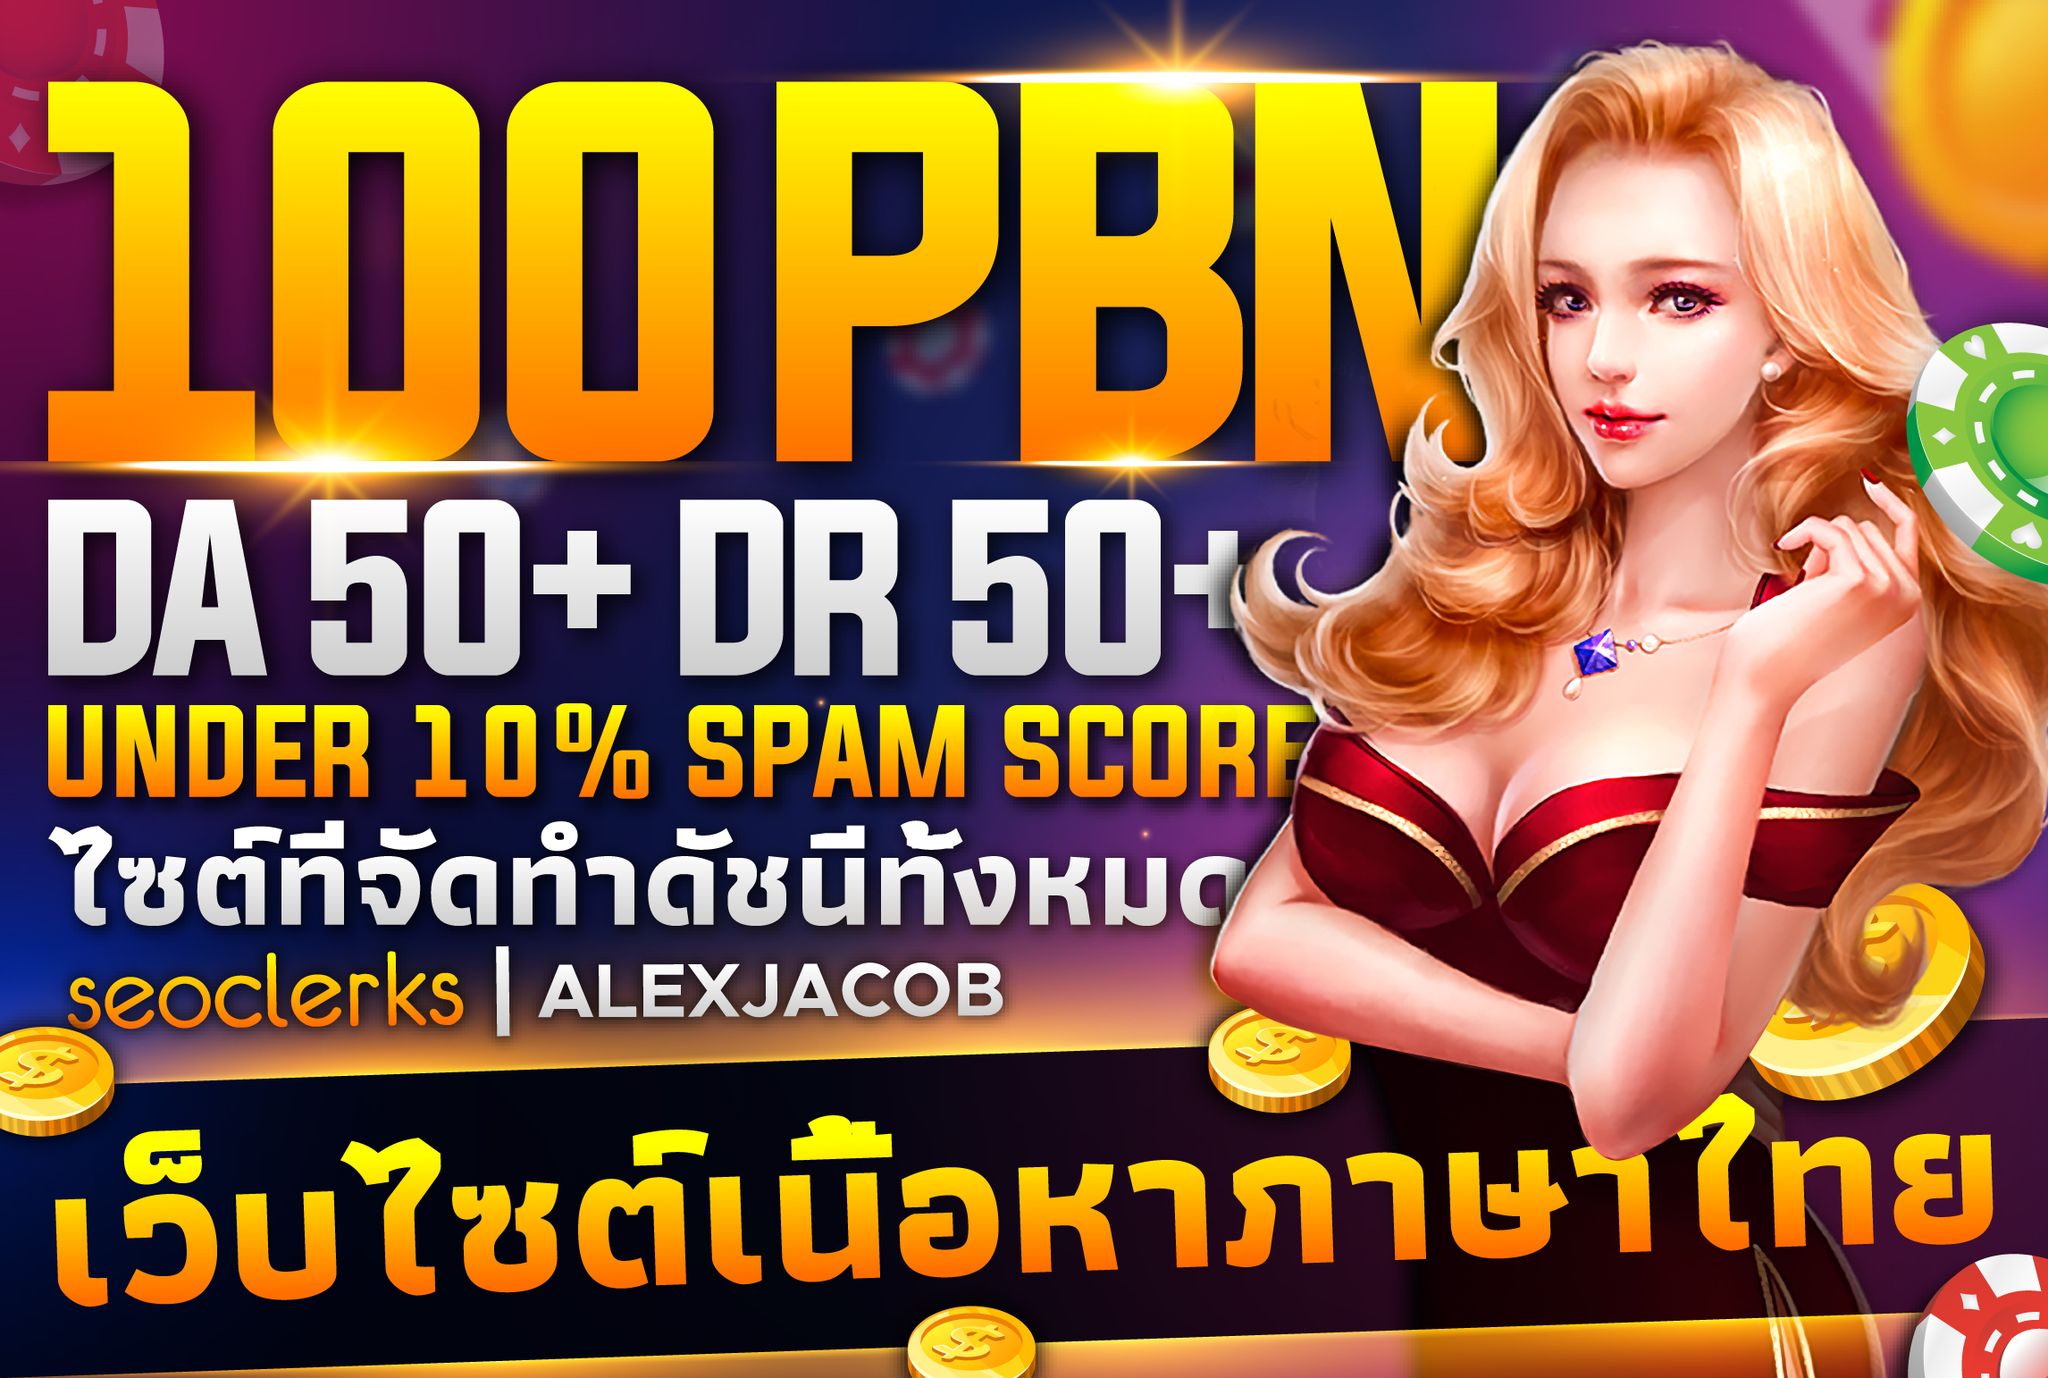 Premium Quality 100 Thai PBN Casino with DA50+ DR50+ with thai Content dofollow backlinks